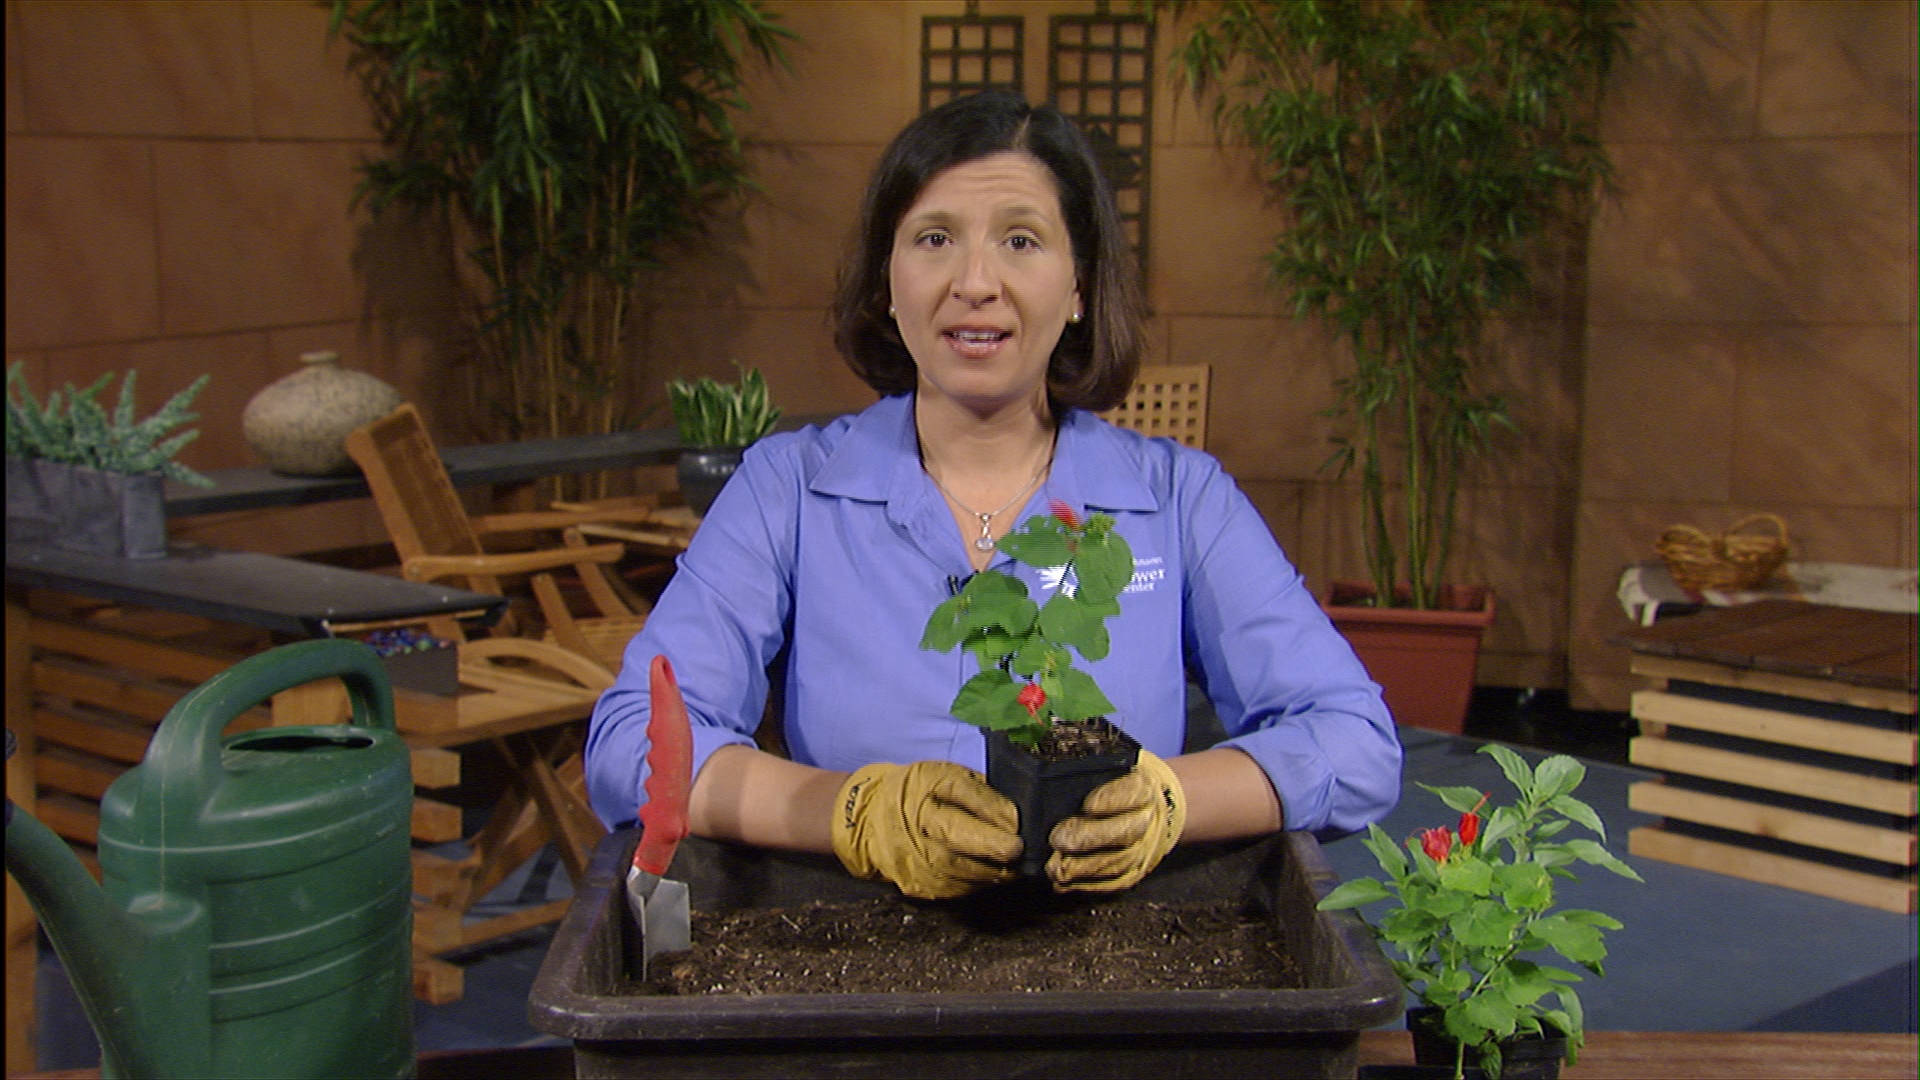 Andrea DeLong-Amaya shows how to plant